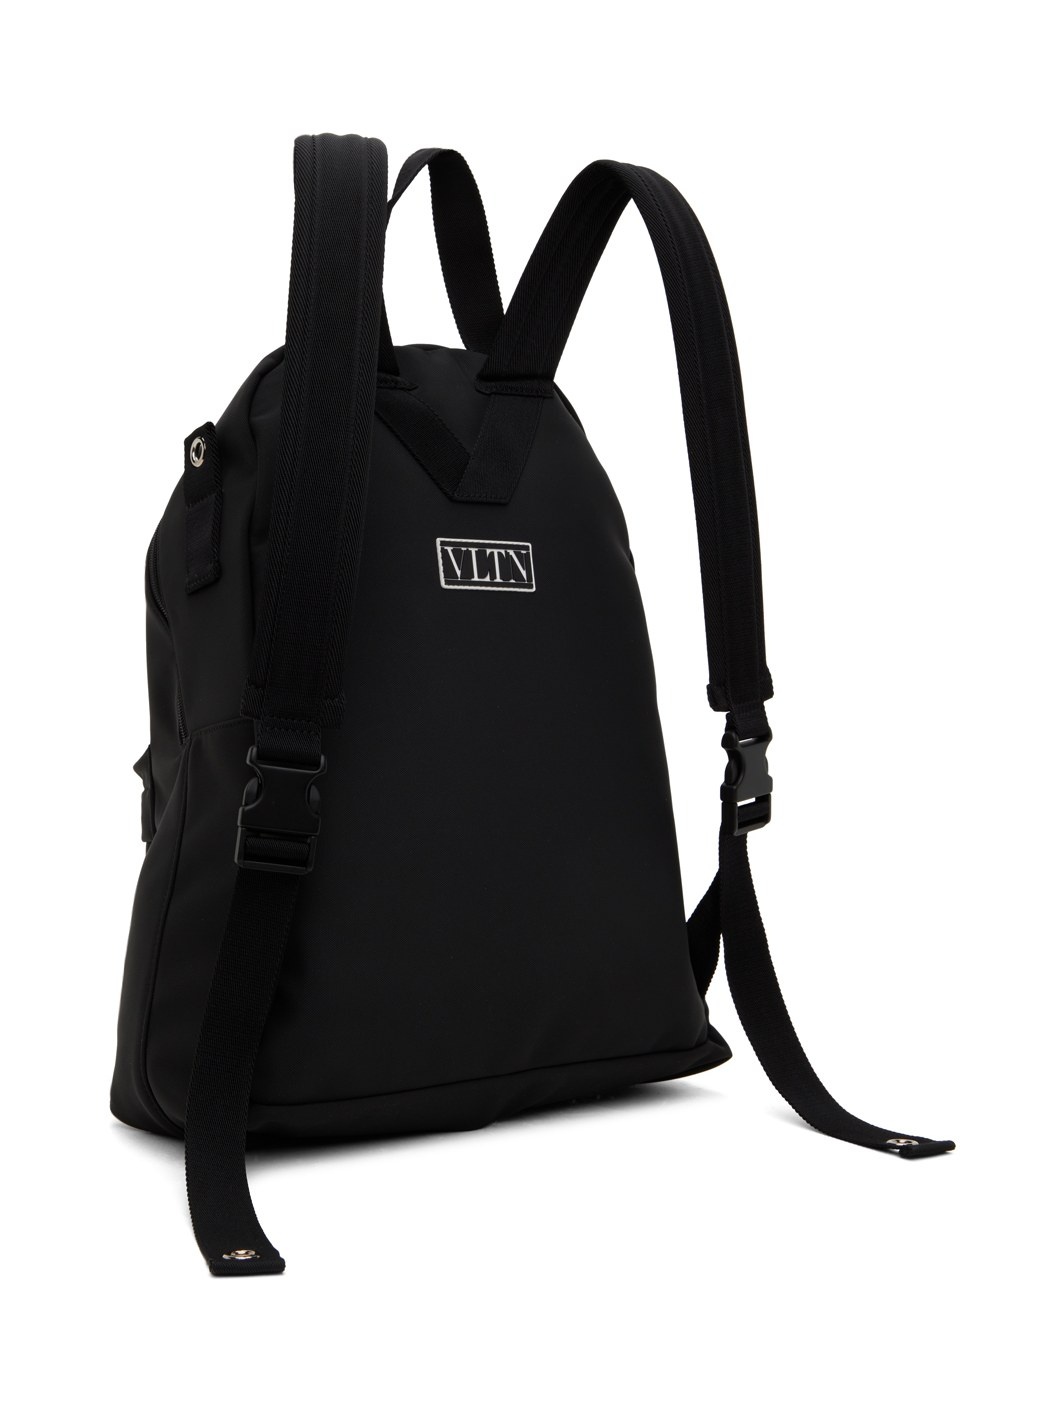 Black 'VLTN' Print Backpack - 3